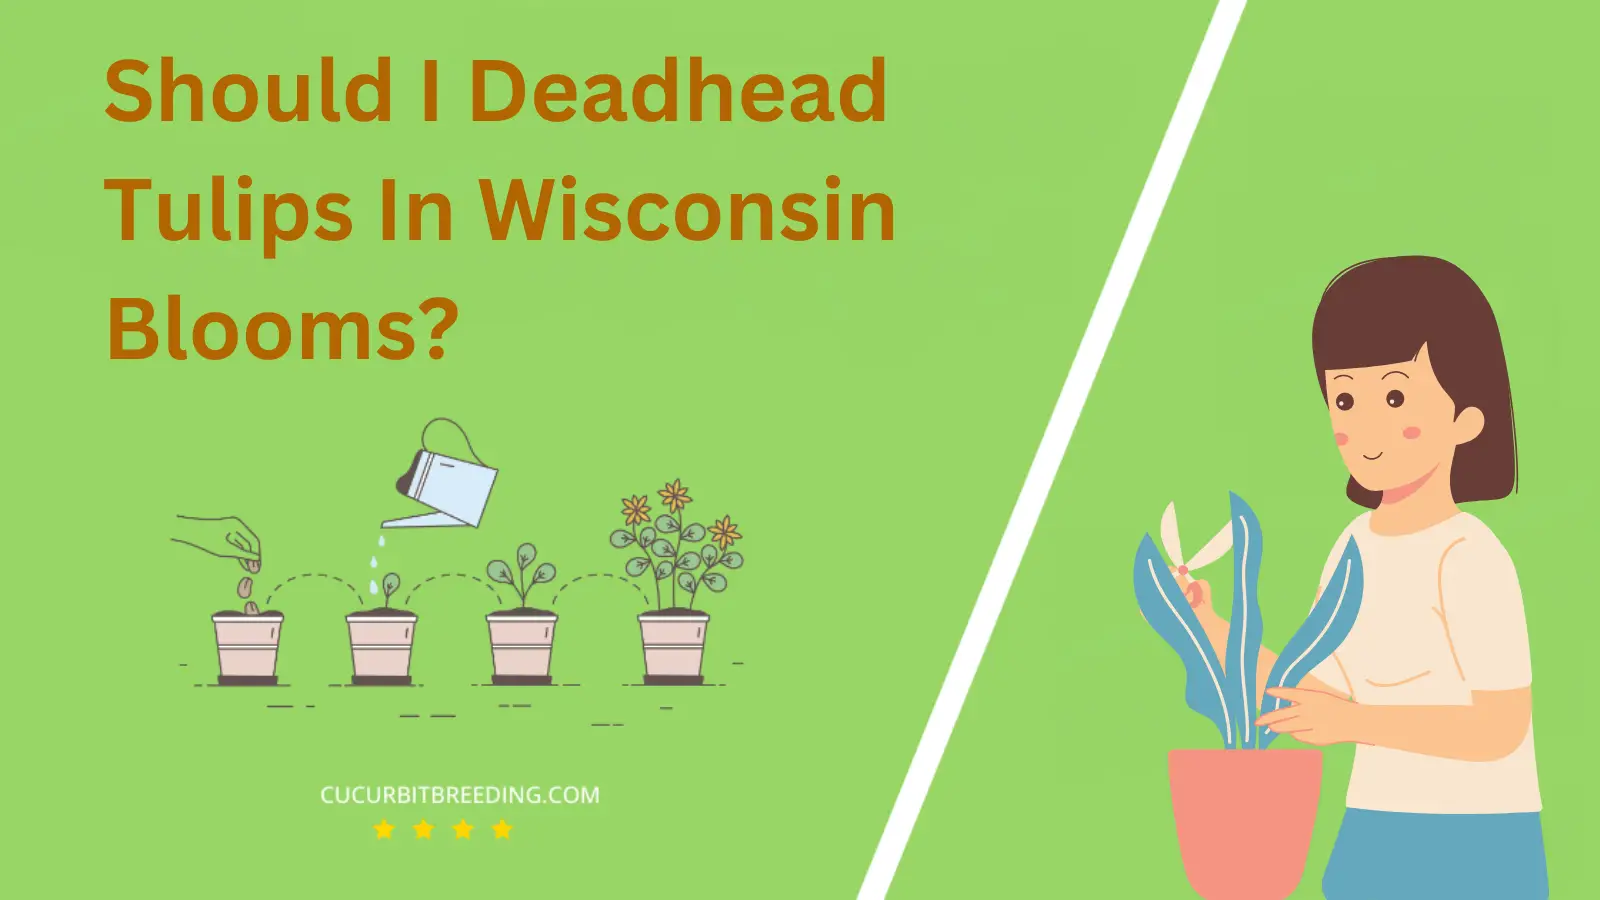 Should I Deadhead Tulips In Wisconsin Blooms?